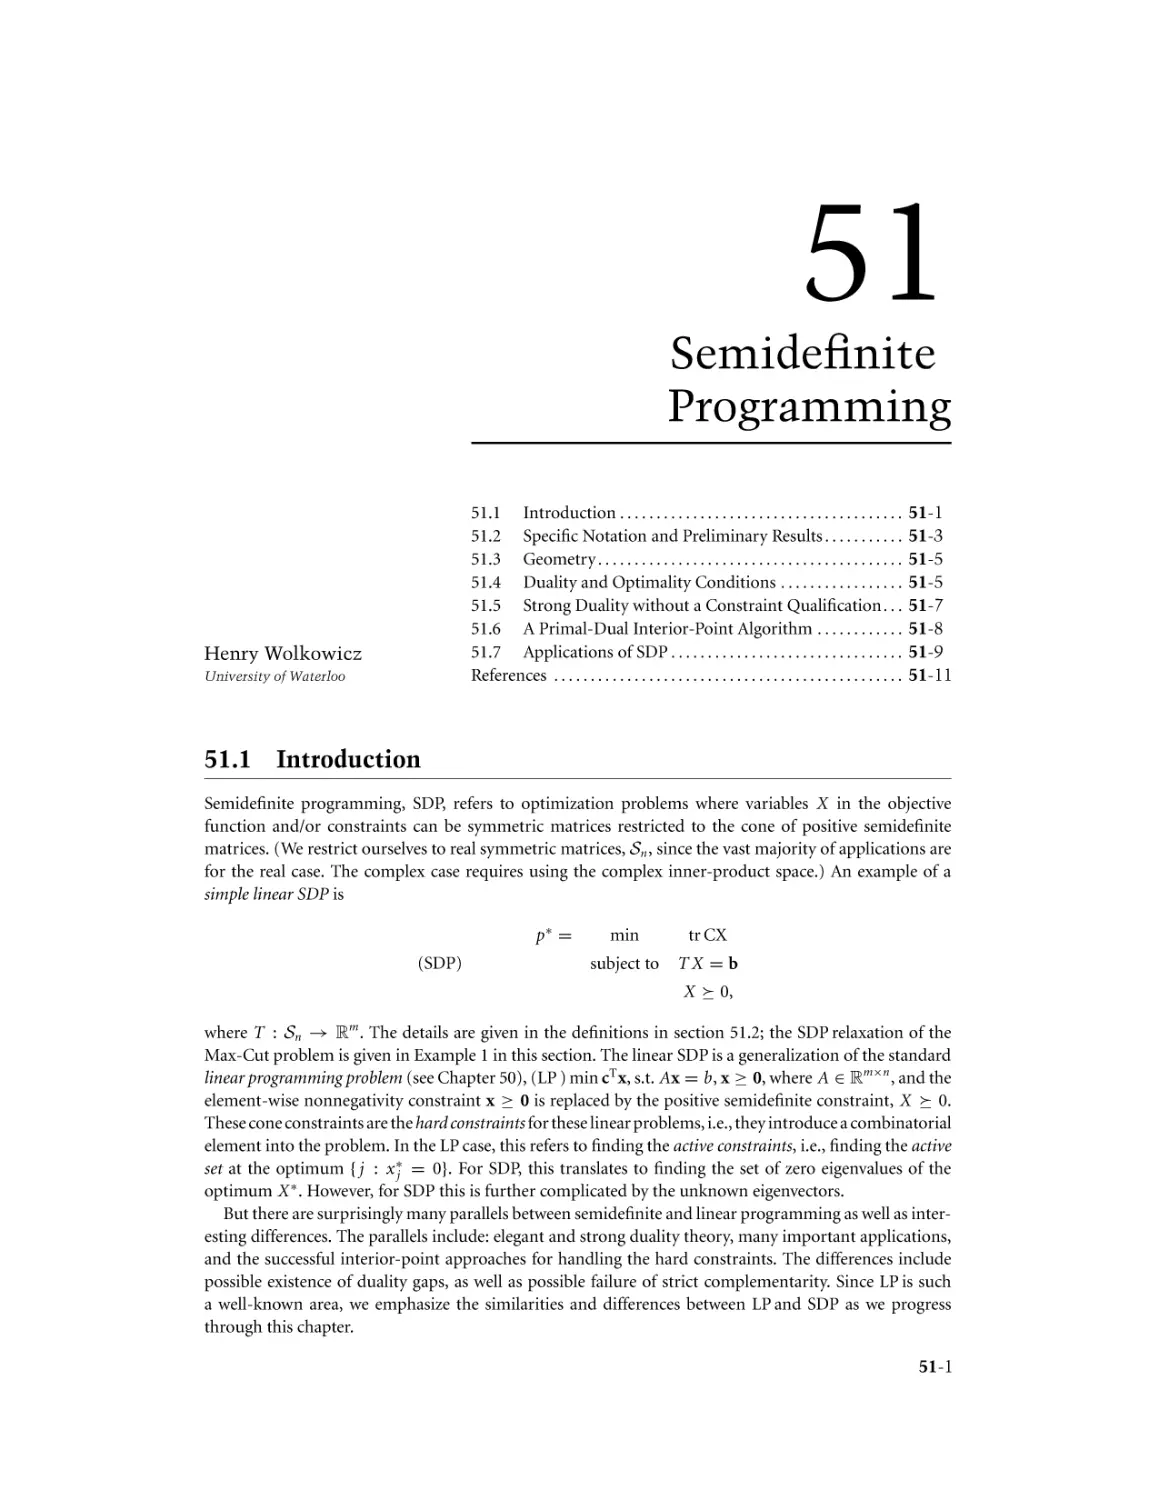 Chapter 51. Semidefinite Programming